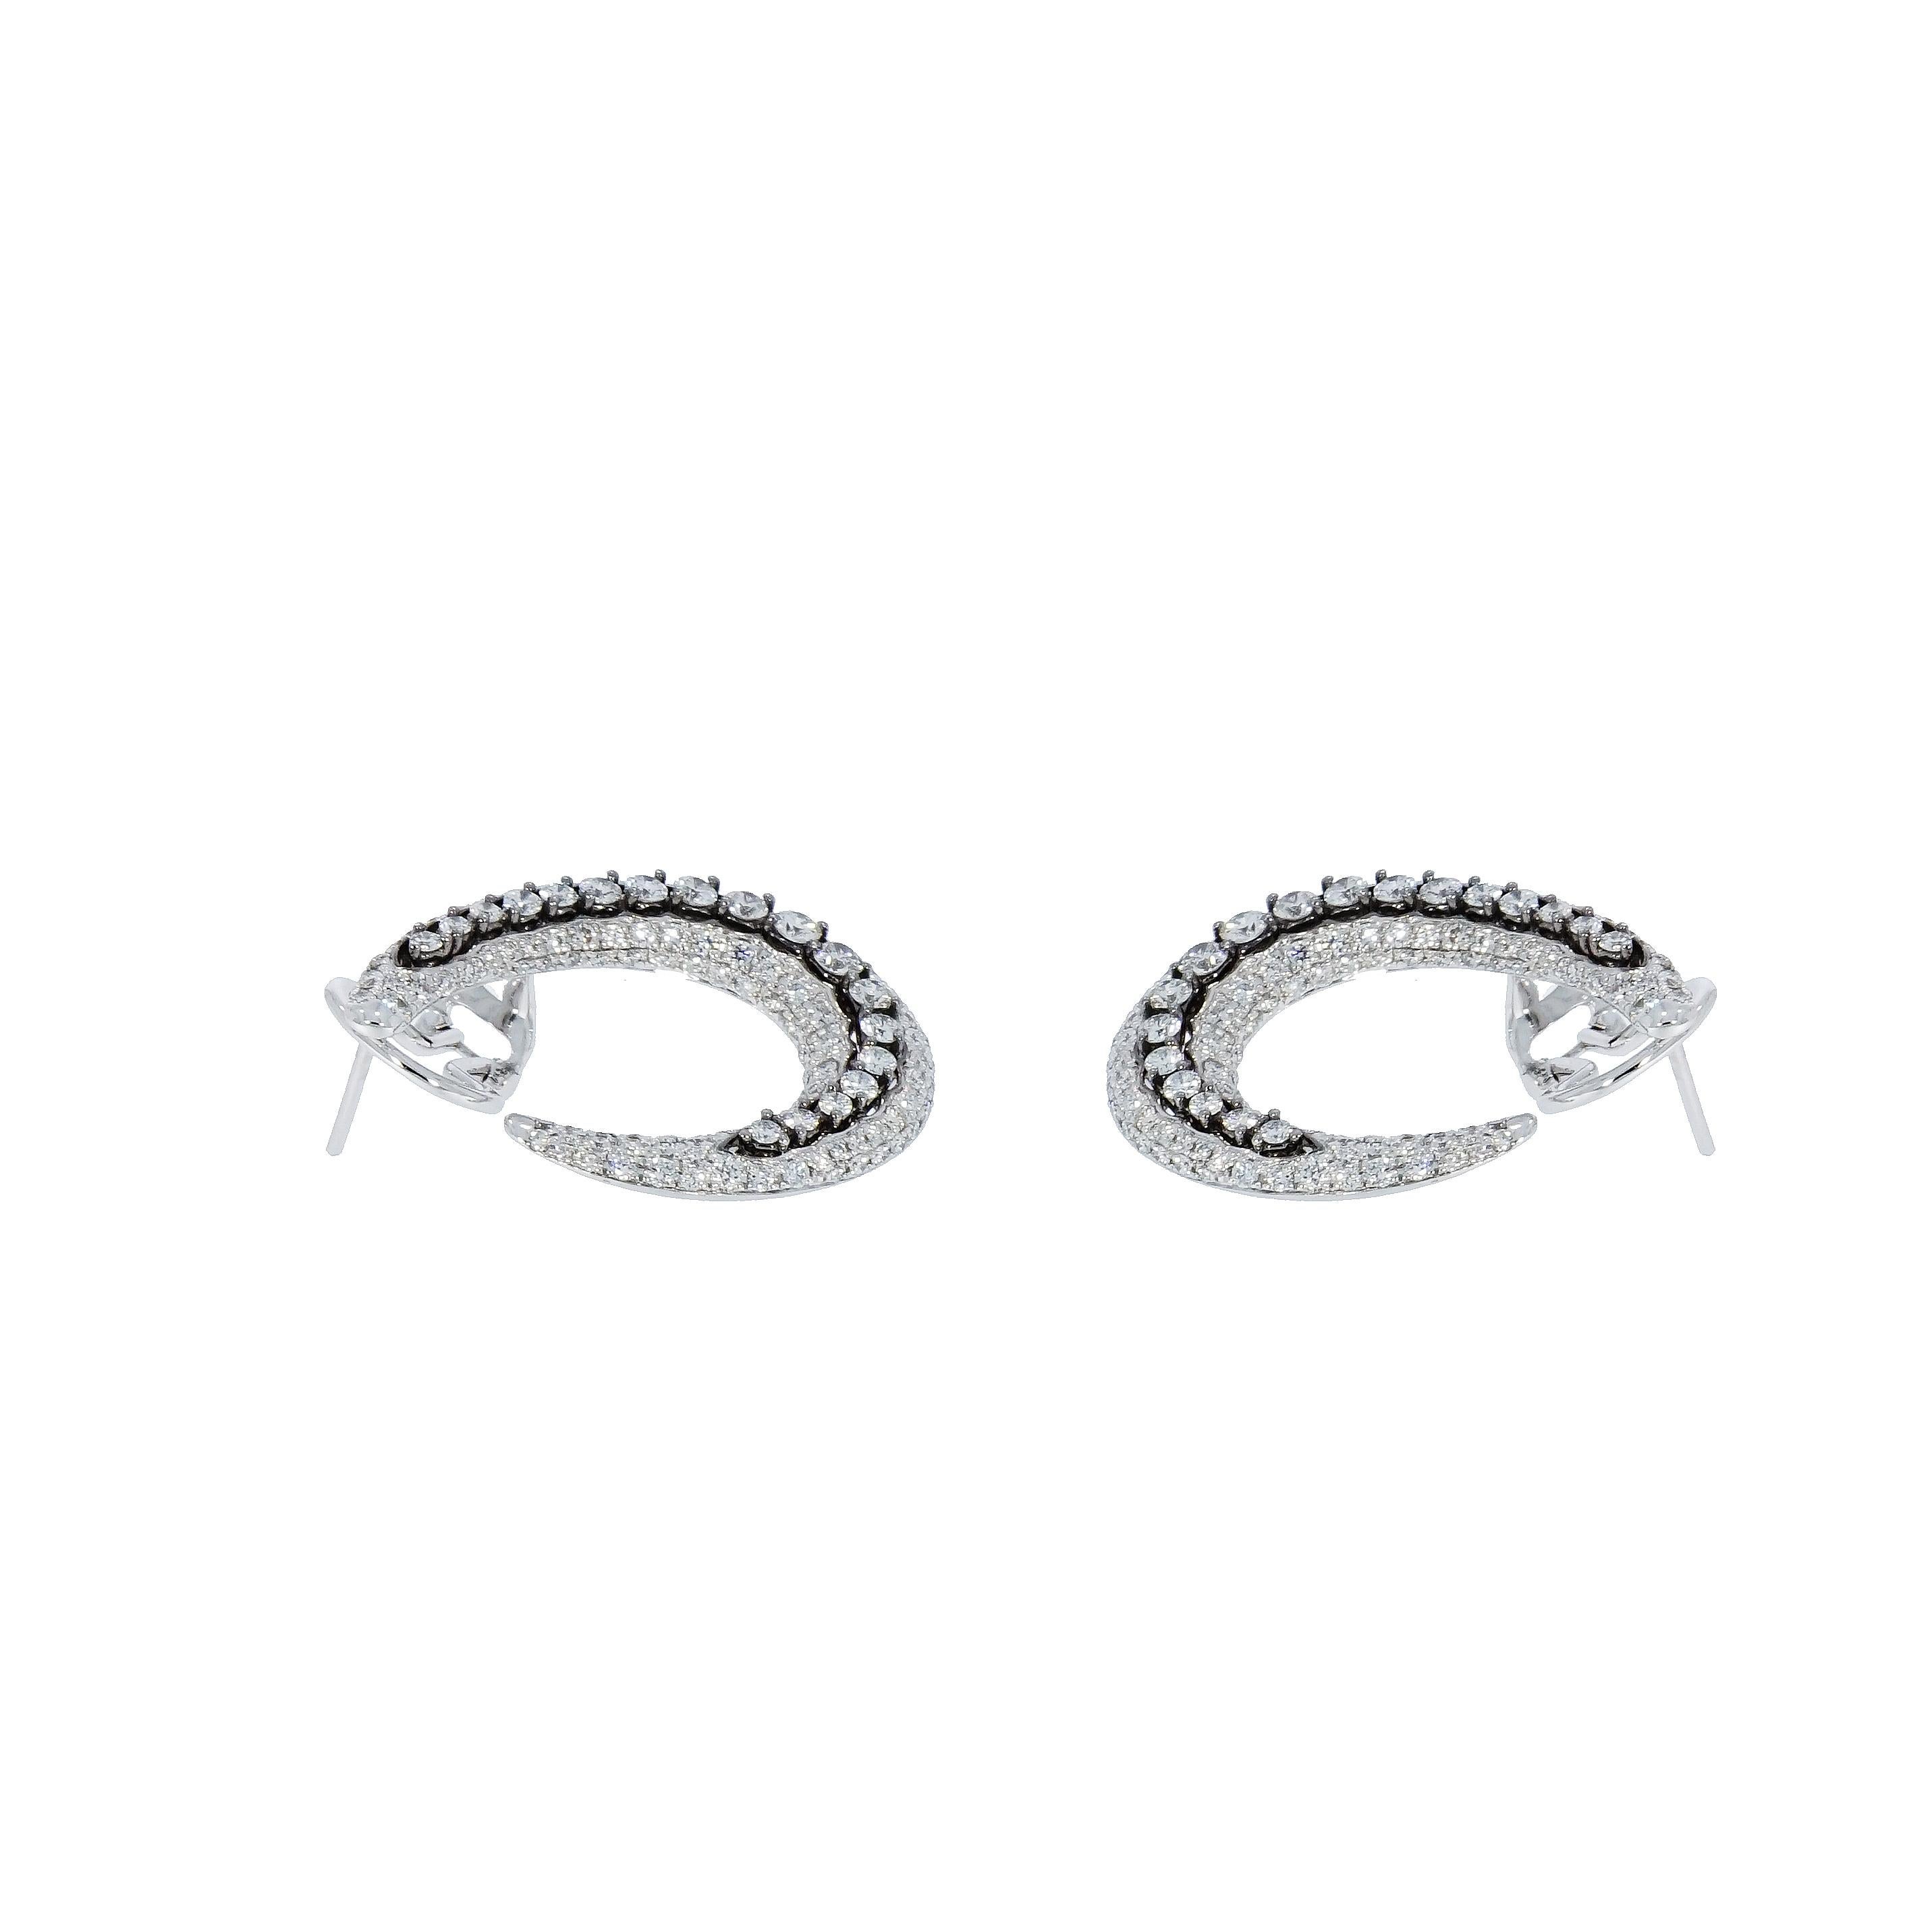 Modern White Gold Diamond Earrings by Casato